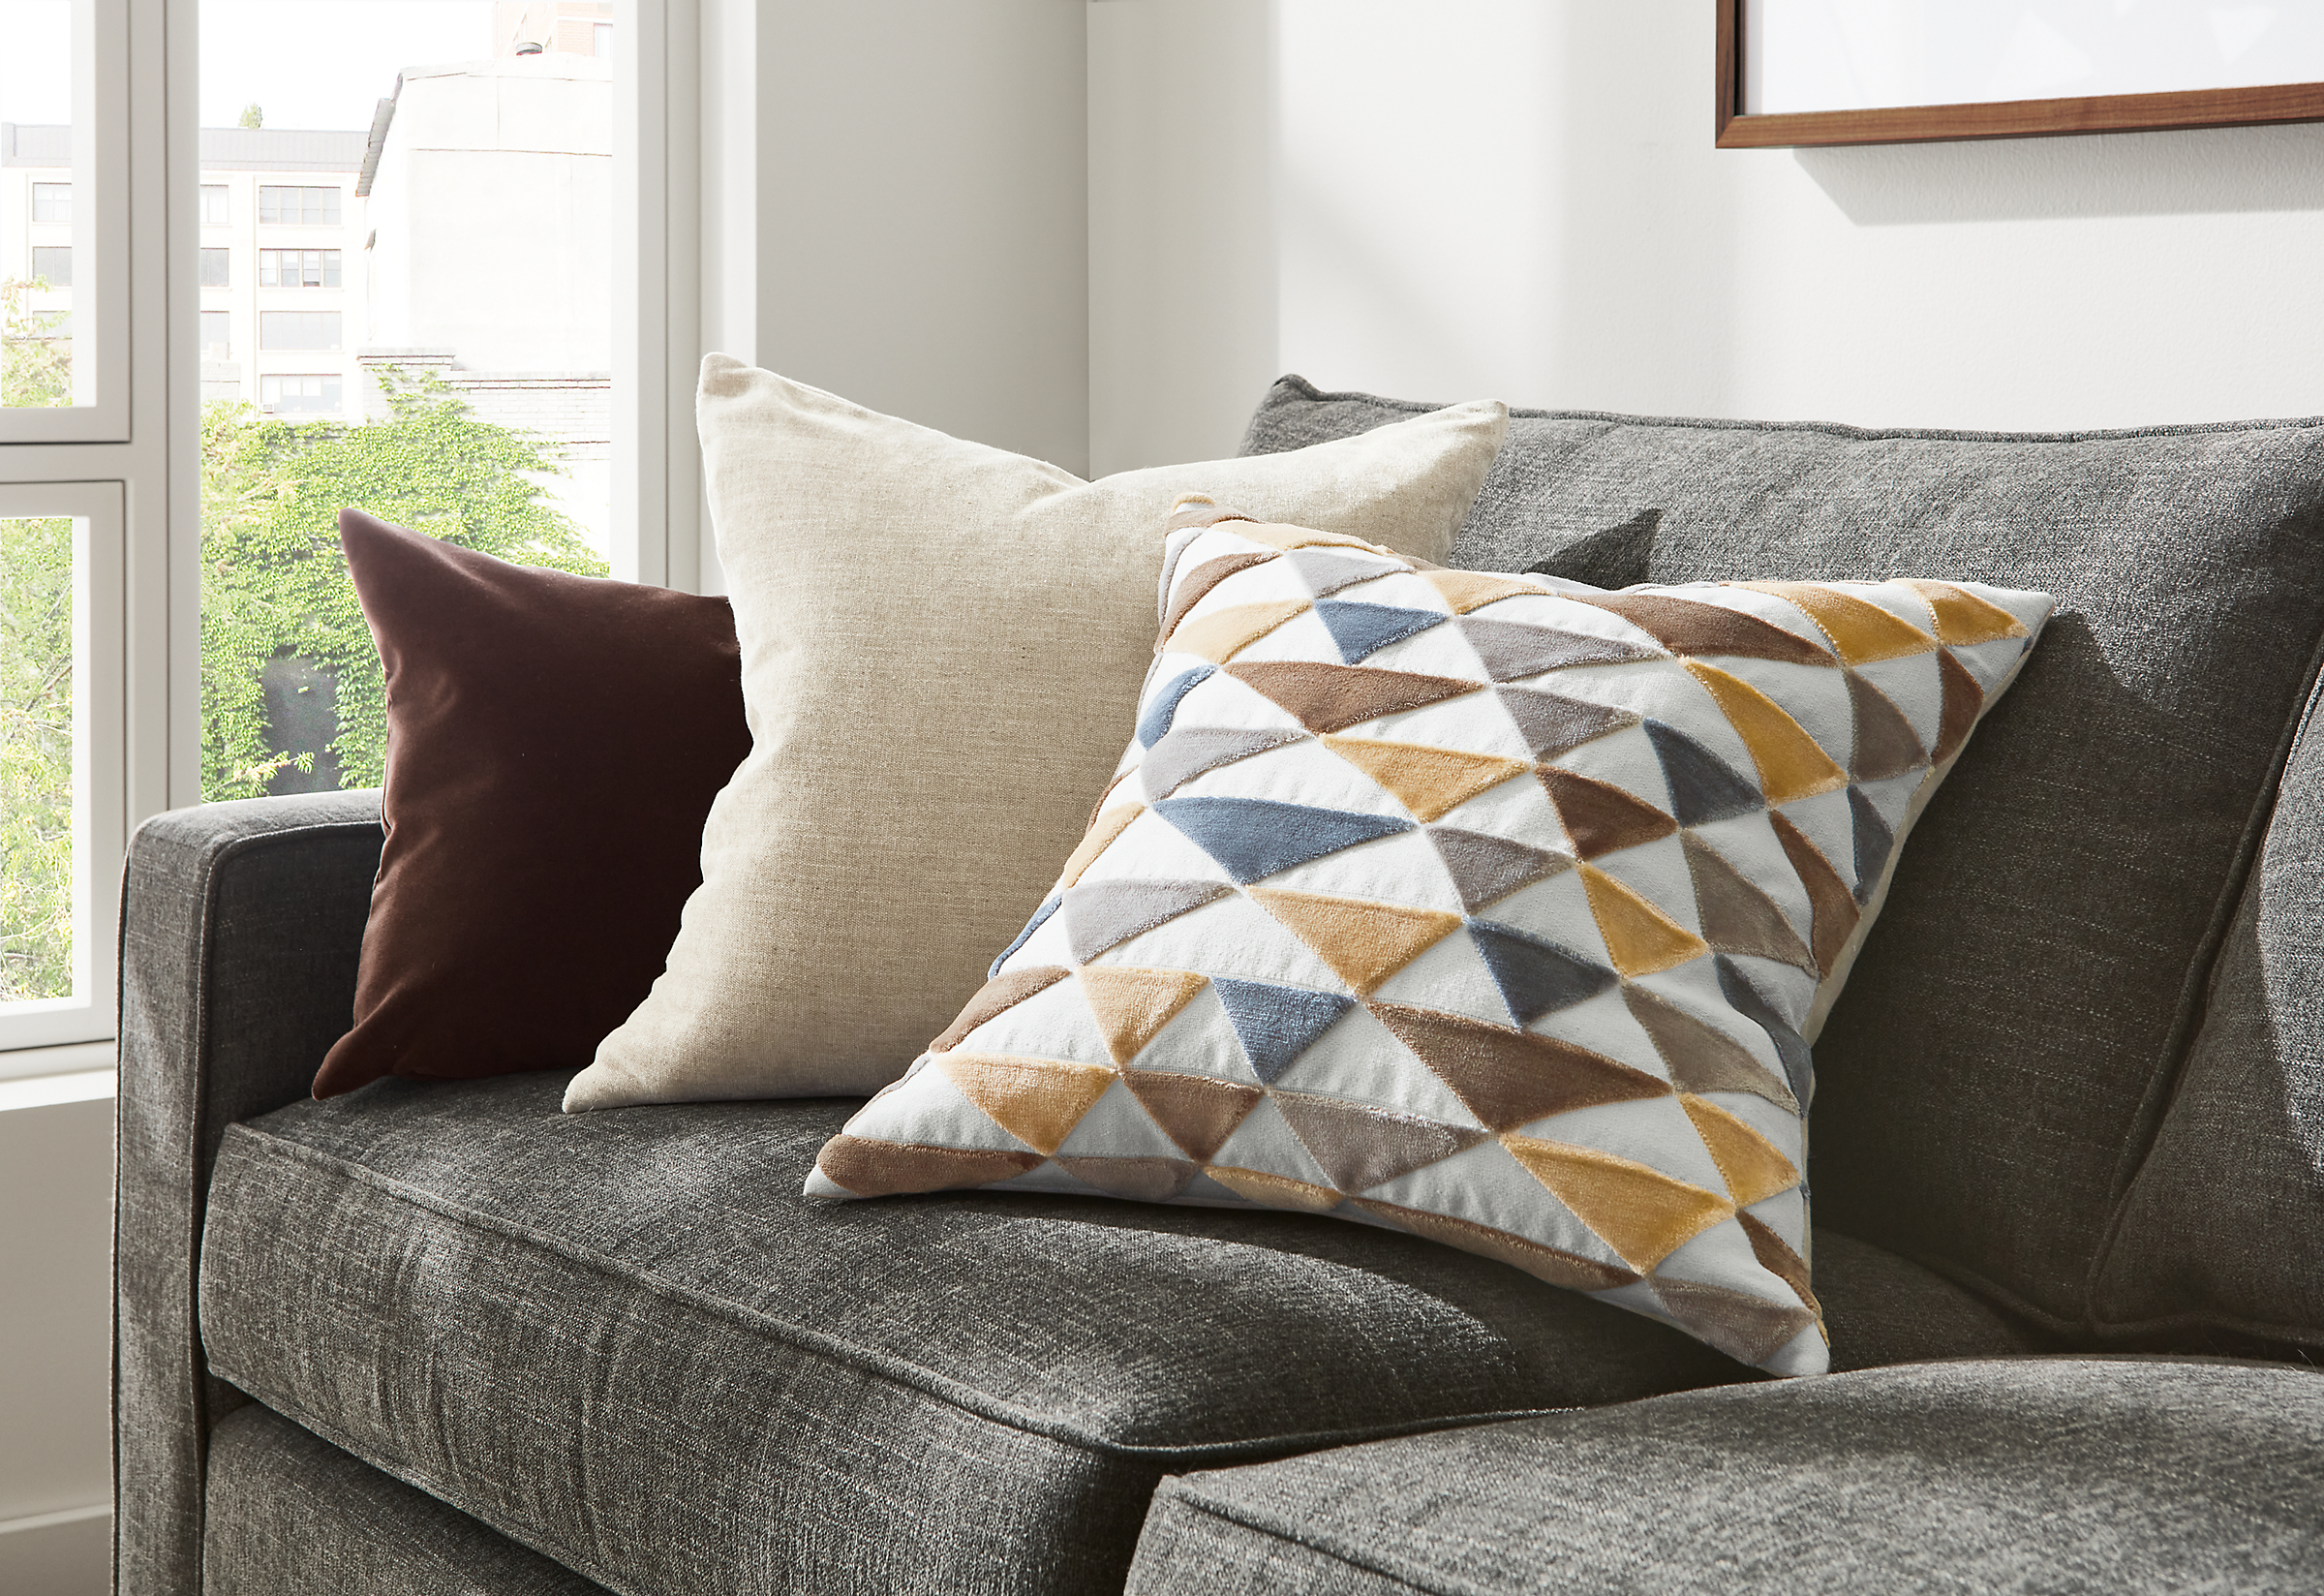 Pyramid pillow, Burton pillow and Velvet pillow on York sofa.